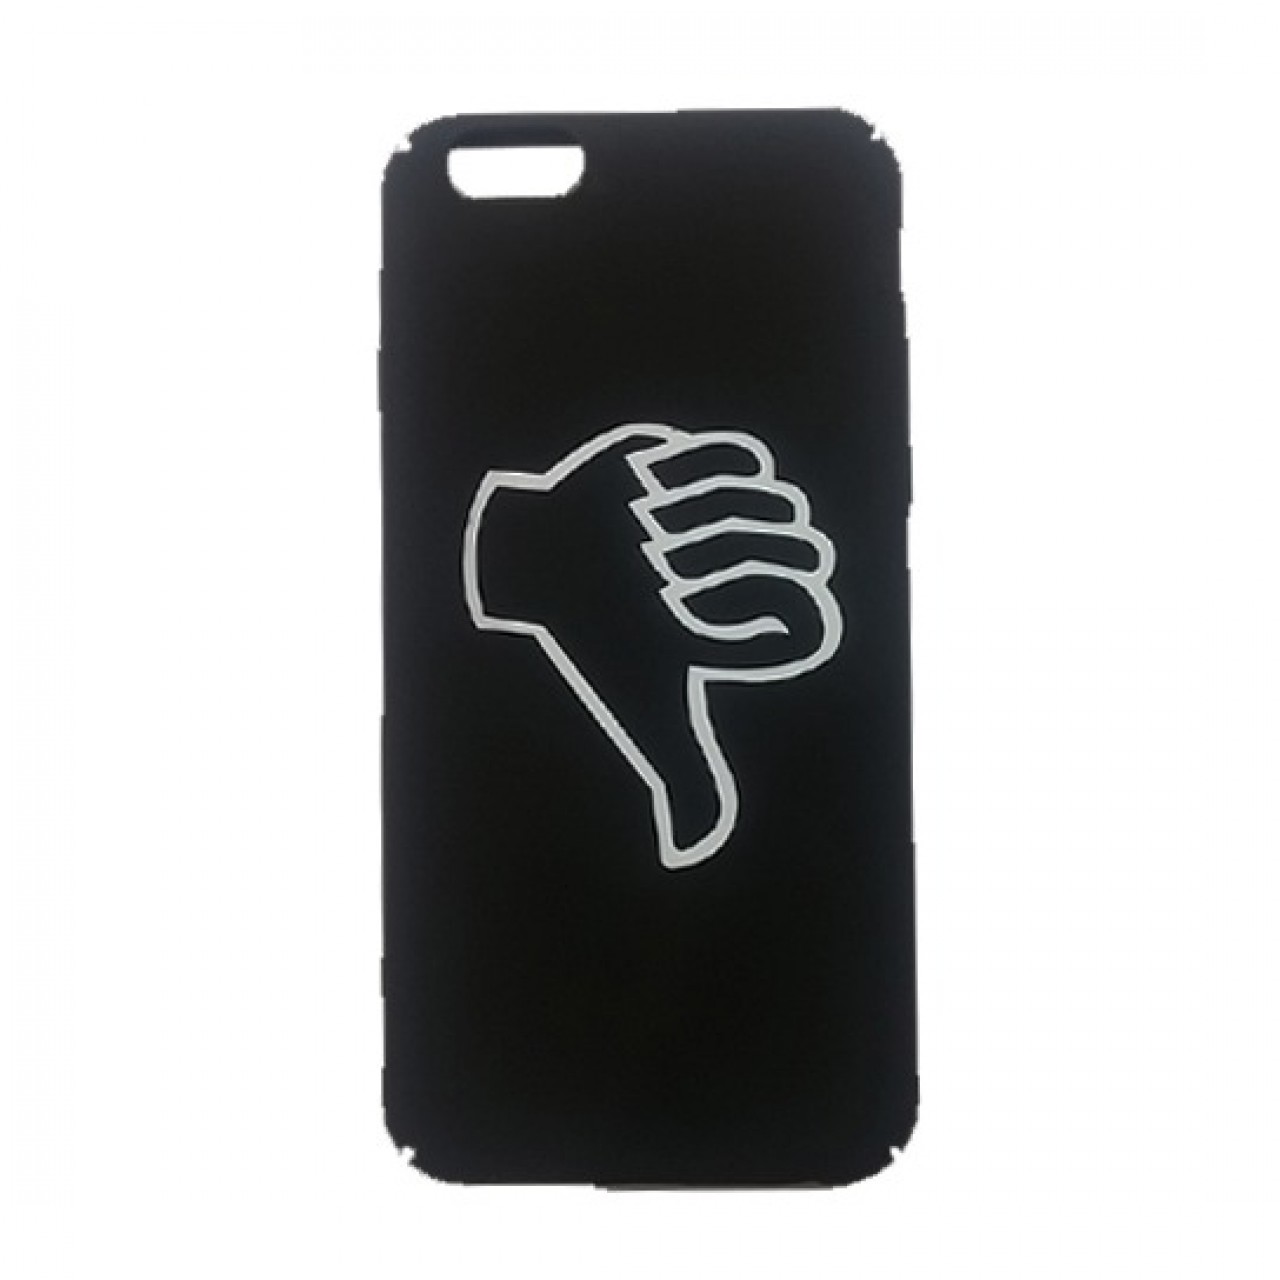 iPhone 5/5S Thumbs Down Logo Hard Case - Black